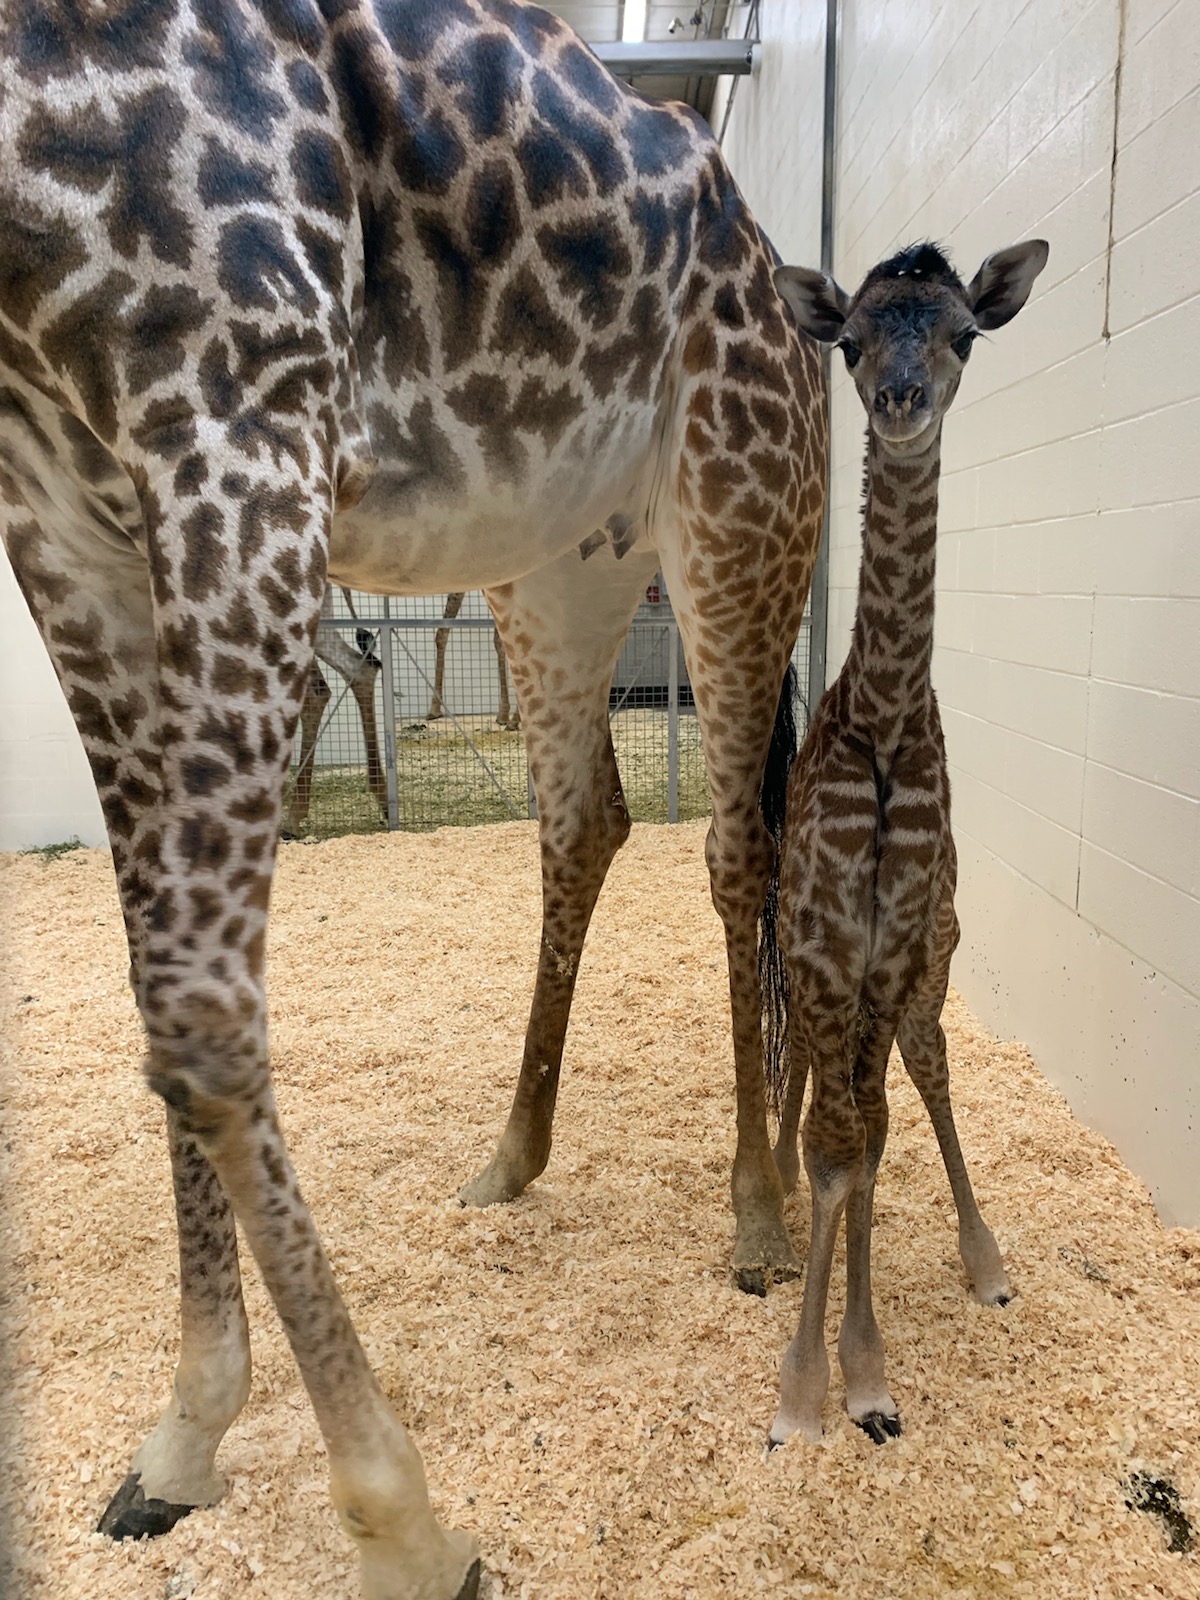 A young giraffe calf with its mum Tessa at Cincinnati Zoo